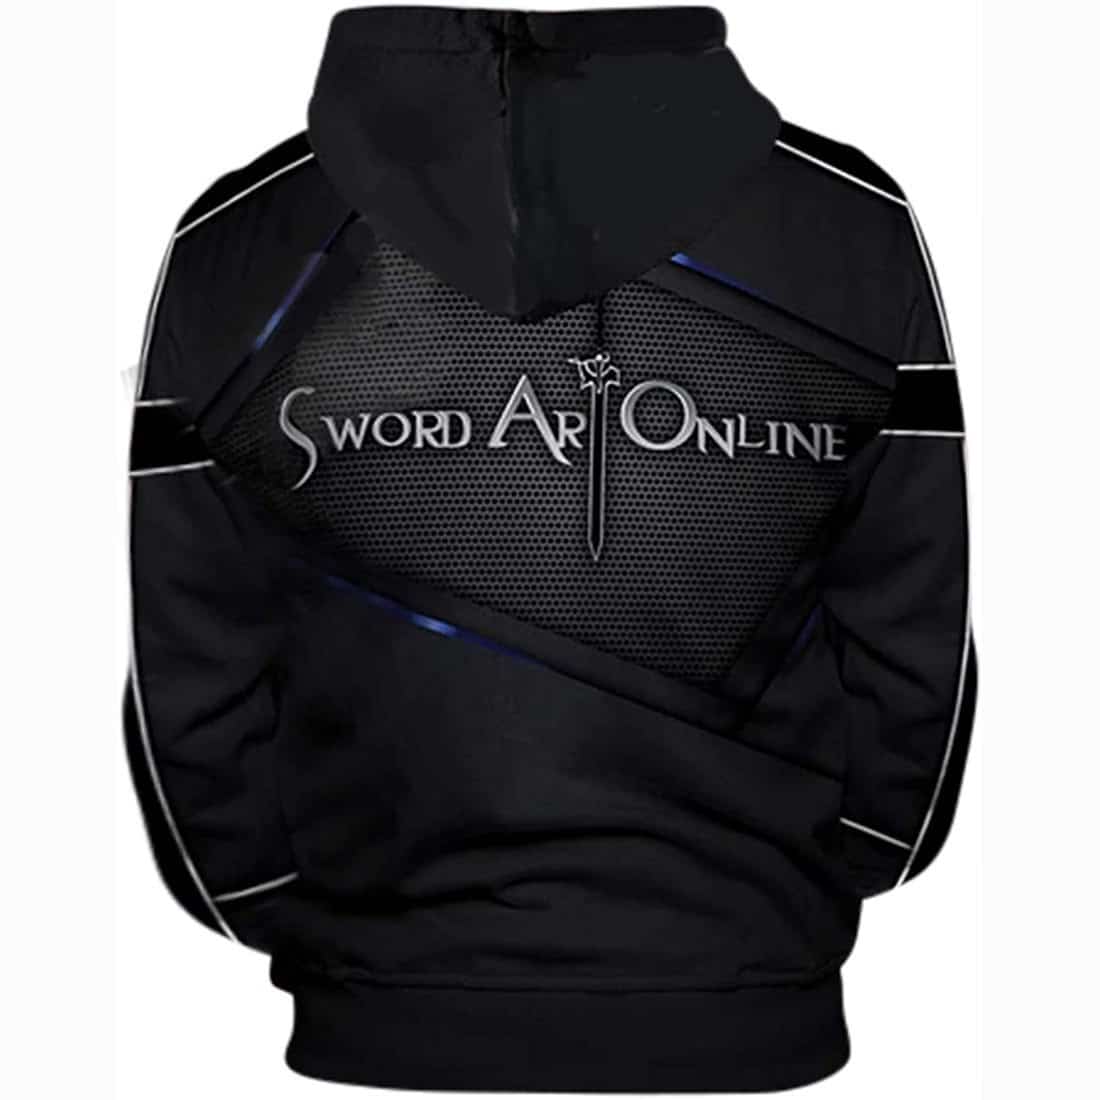 SAO Sword Art Online Kirigaya Kazuto Pullover Hoodie Kirito Sweatshirt Jacket Unisex